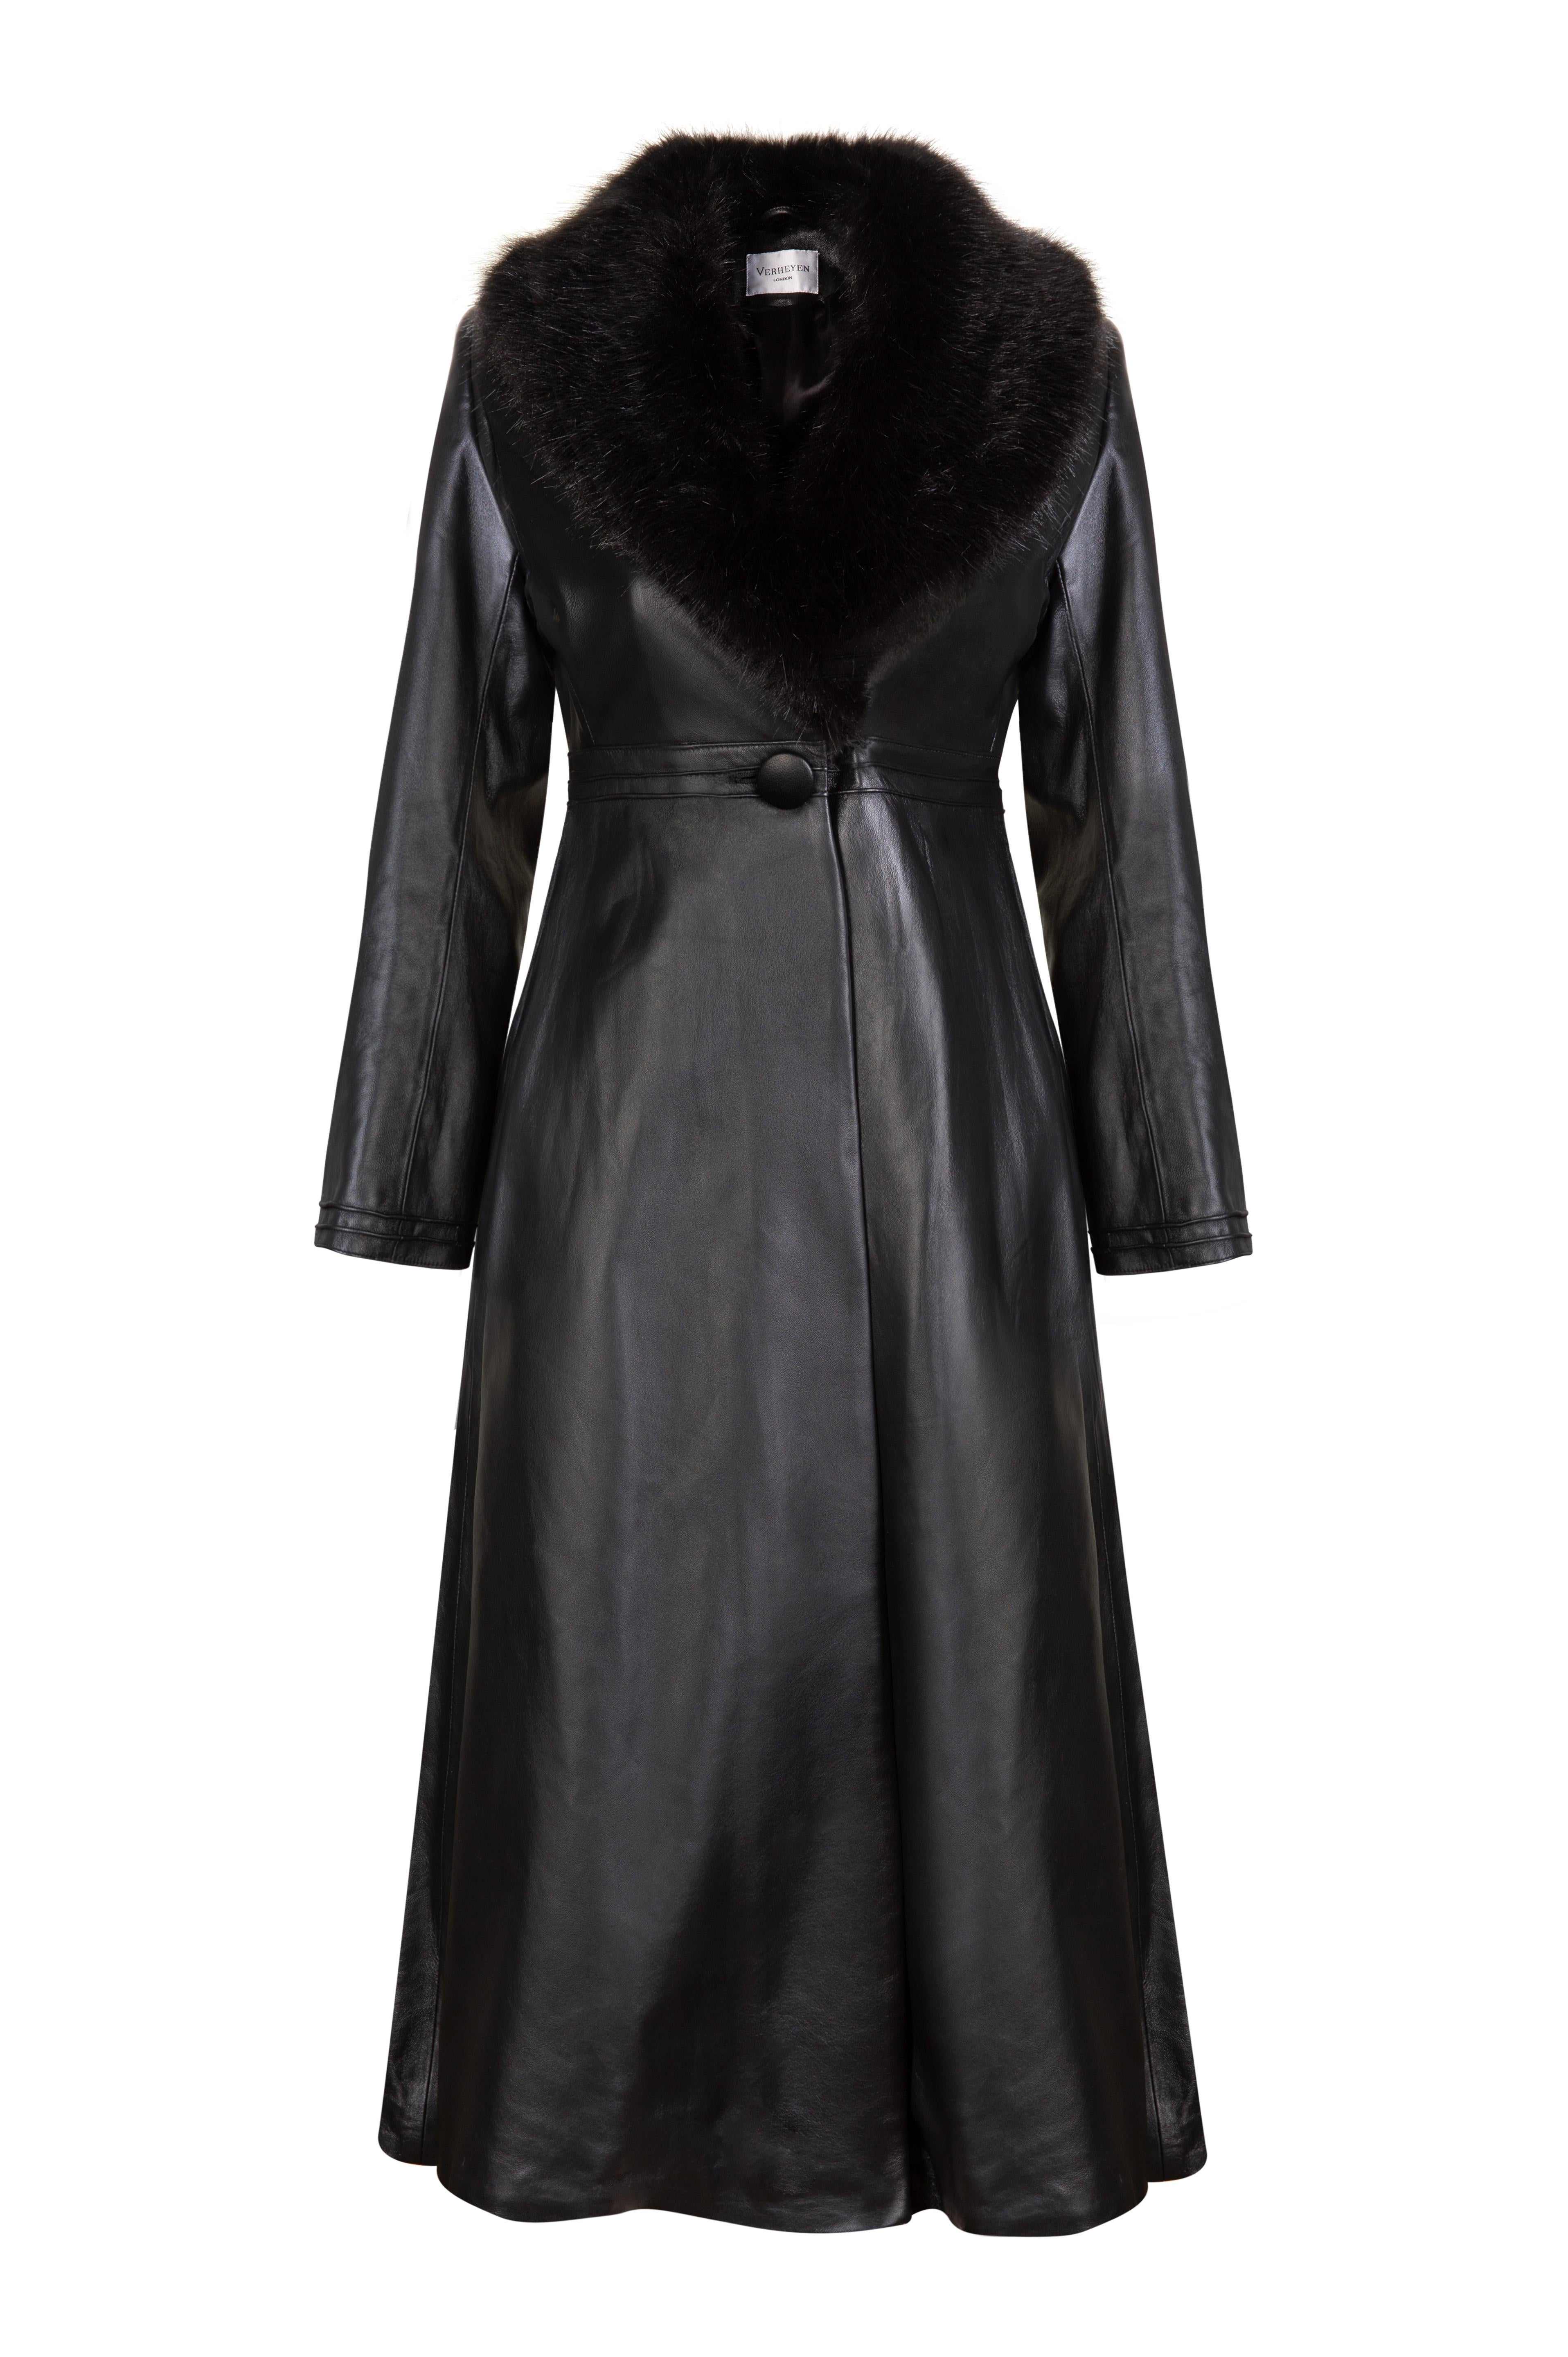 Verheyen London Edward Leather Coat with Faux Fur Collar in Black - Size uk 12 For Sale 13